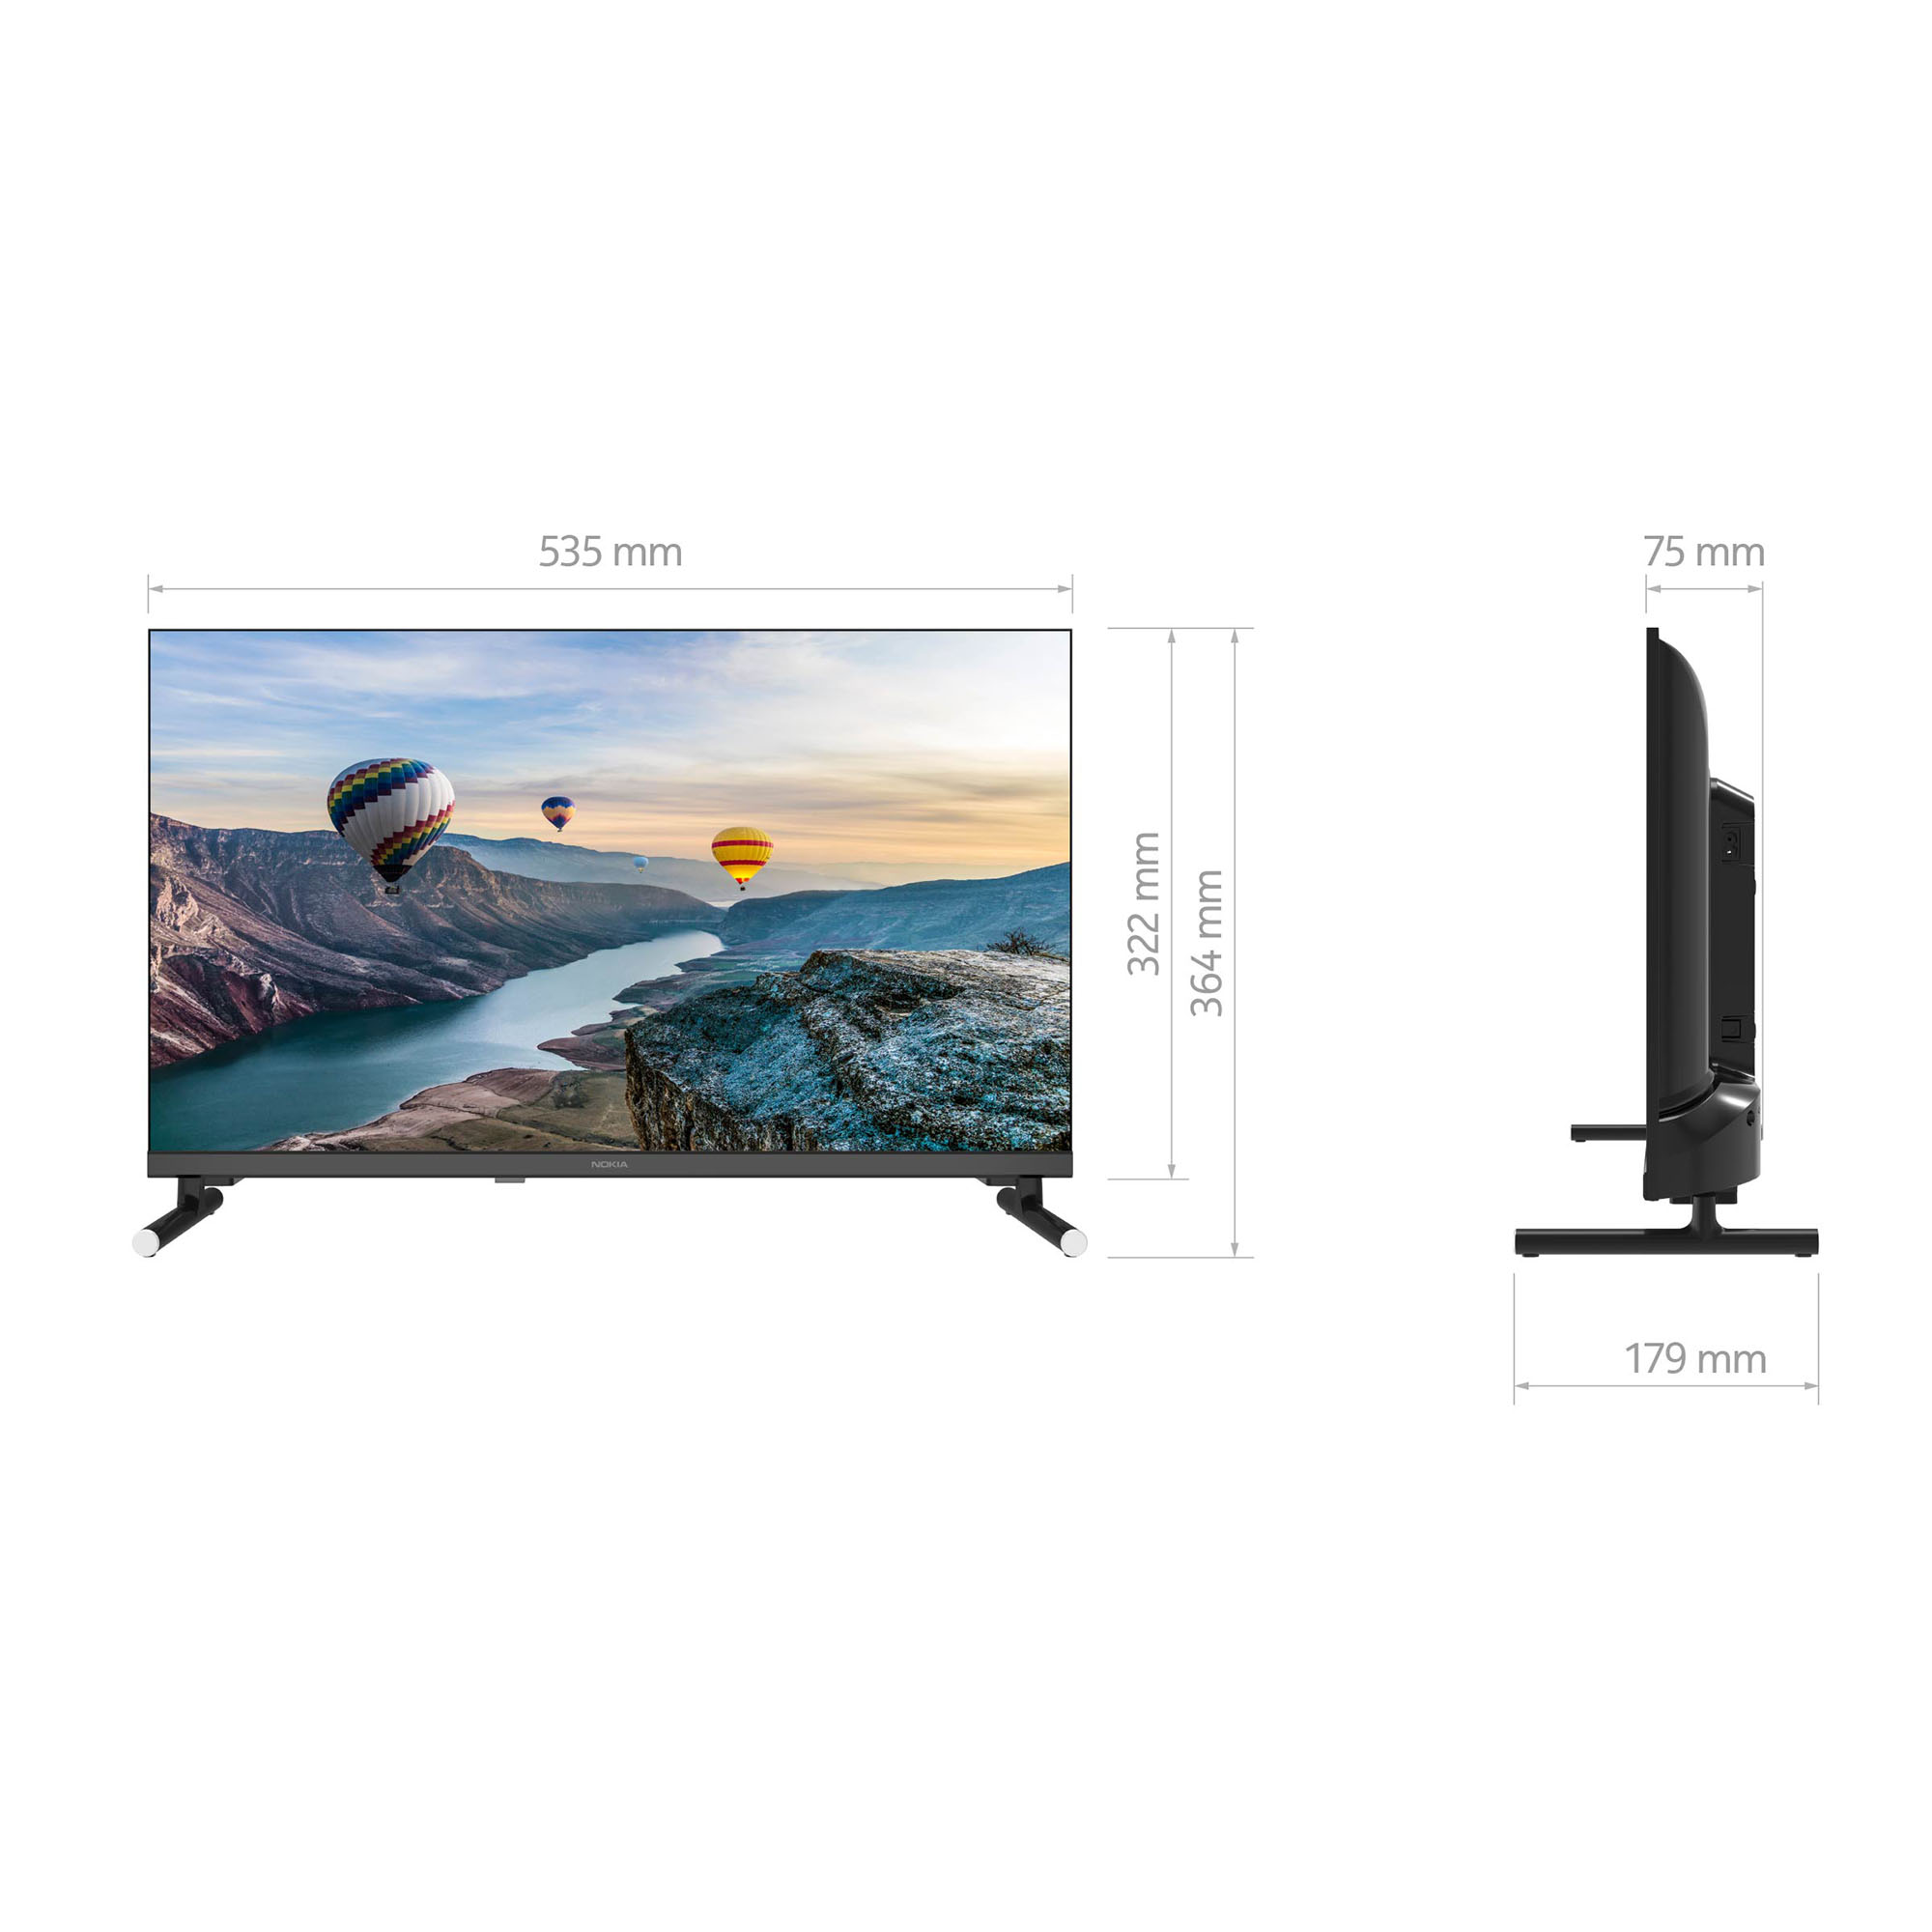 TV) NOKIA SMART (Flat, 24 cm, 61 HN24GE320C HD, Zoll LED / TV